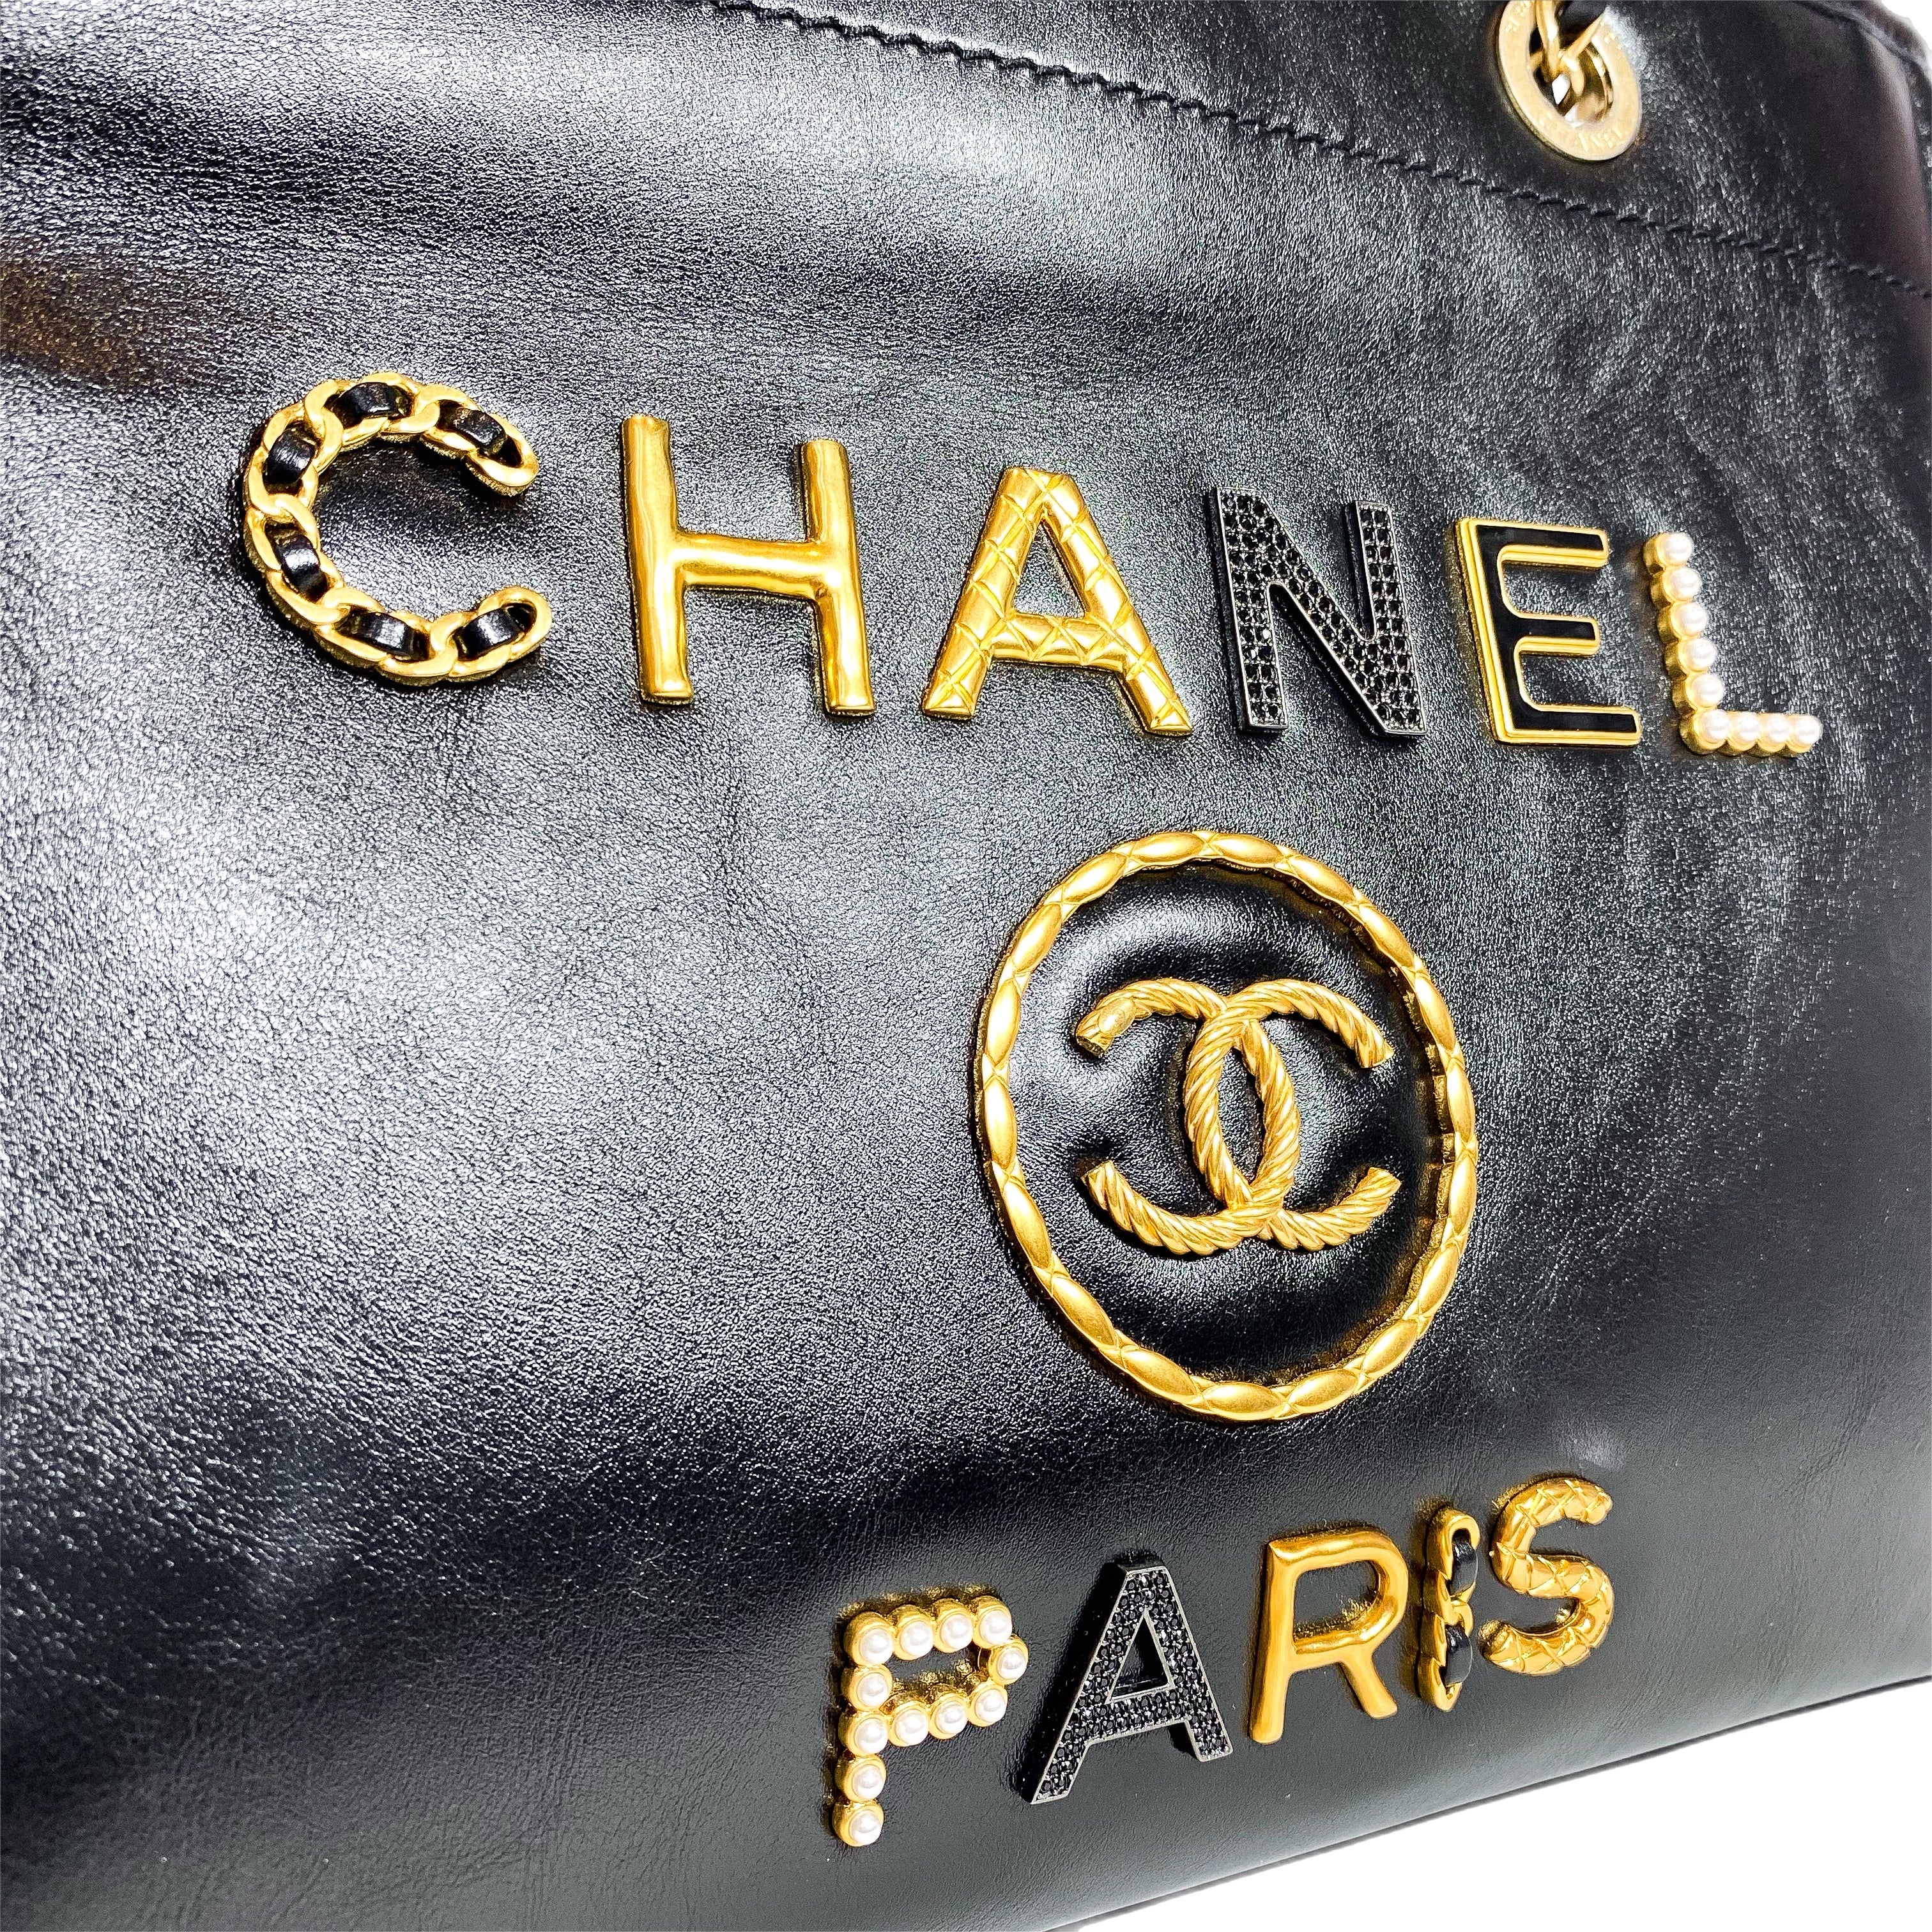 Chanel Black Charms Medium Deauville